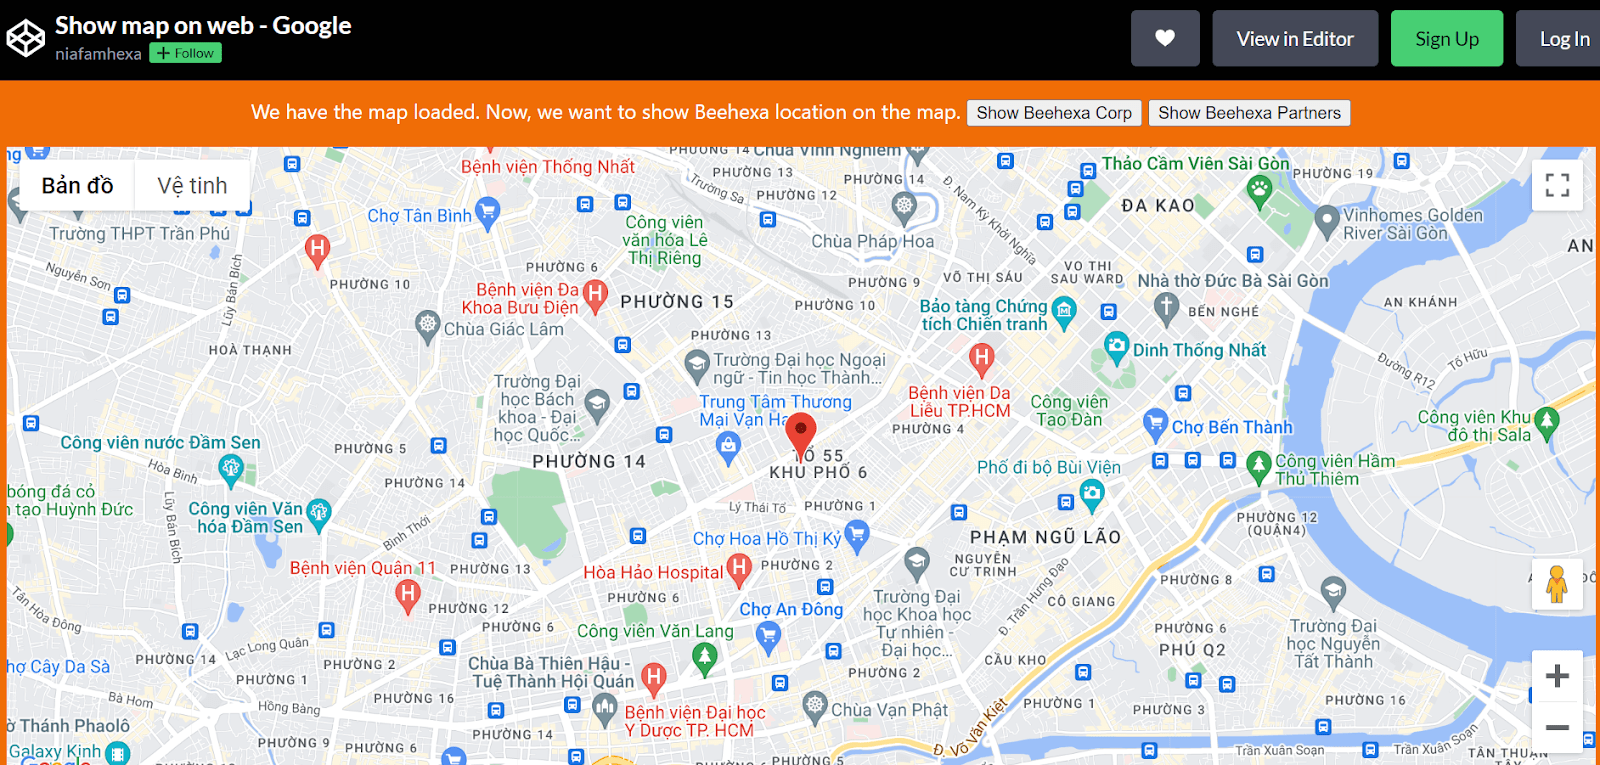 Using Geocoding API to show location